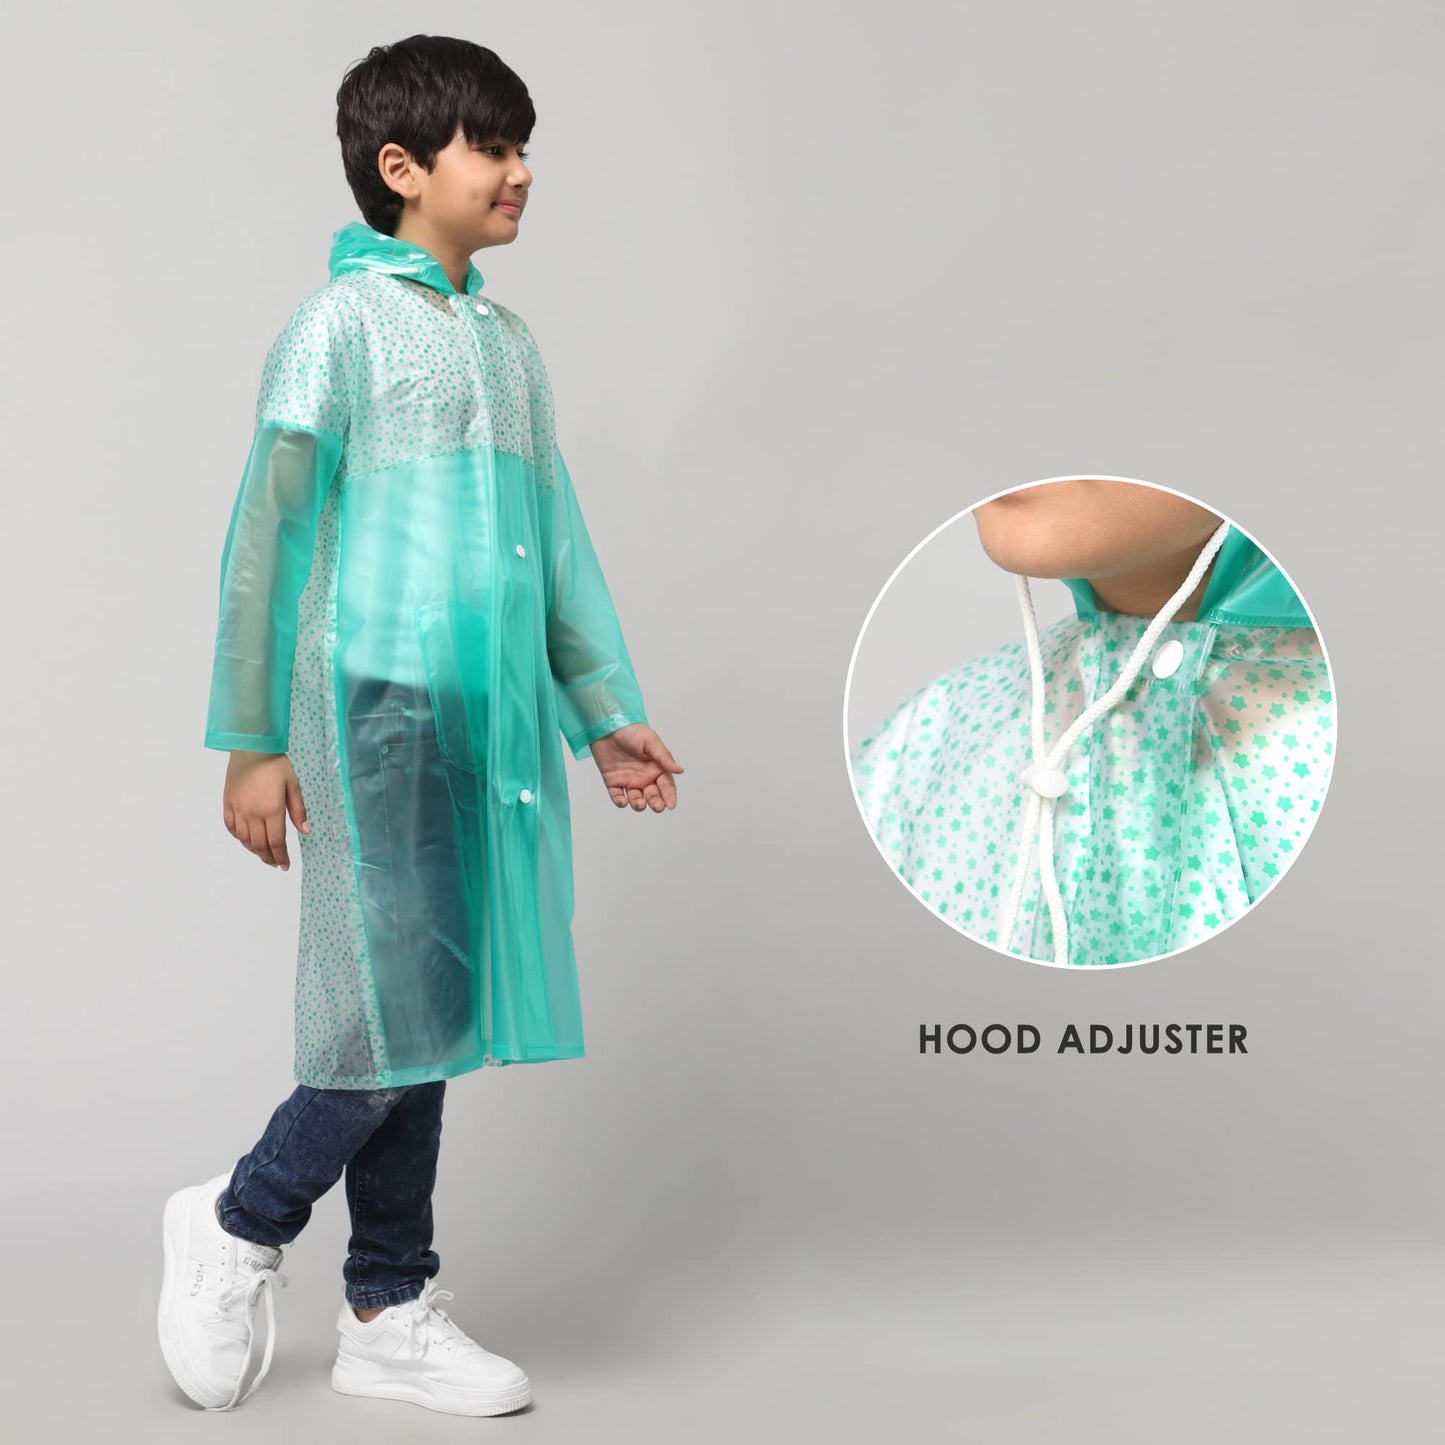 THE CLOWNFISH Drip Dude Series Unisex Kids Waterproof Single Layer PVC Longcoat/Raincoat with Adjustable Hood. Age-3-4 Years (Aqua Green)